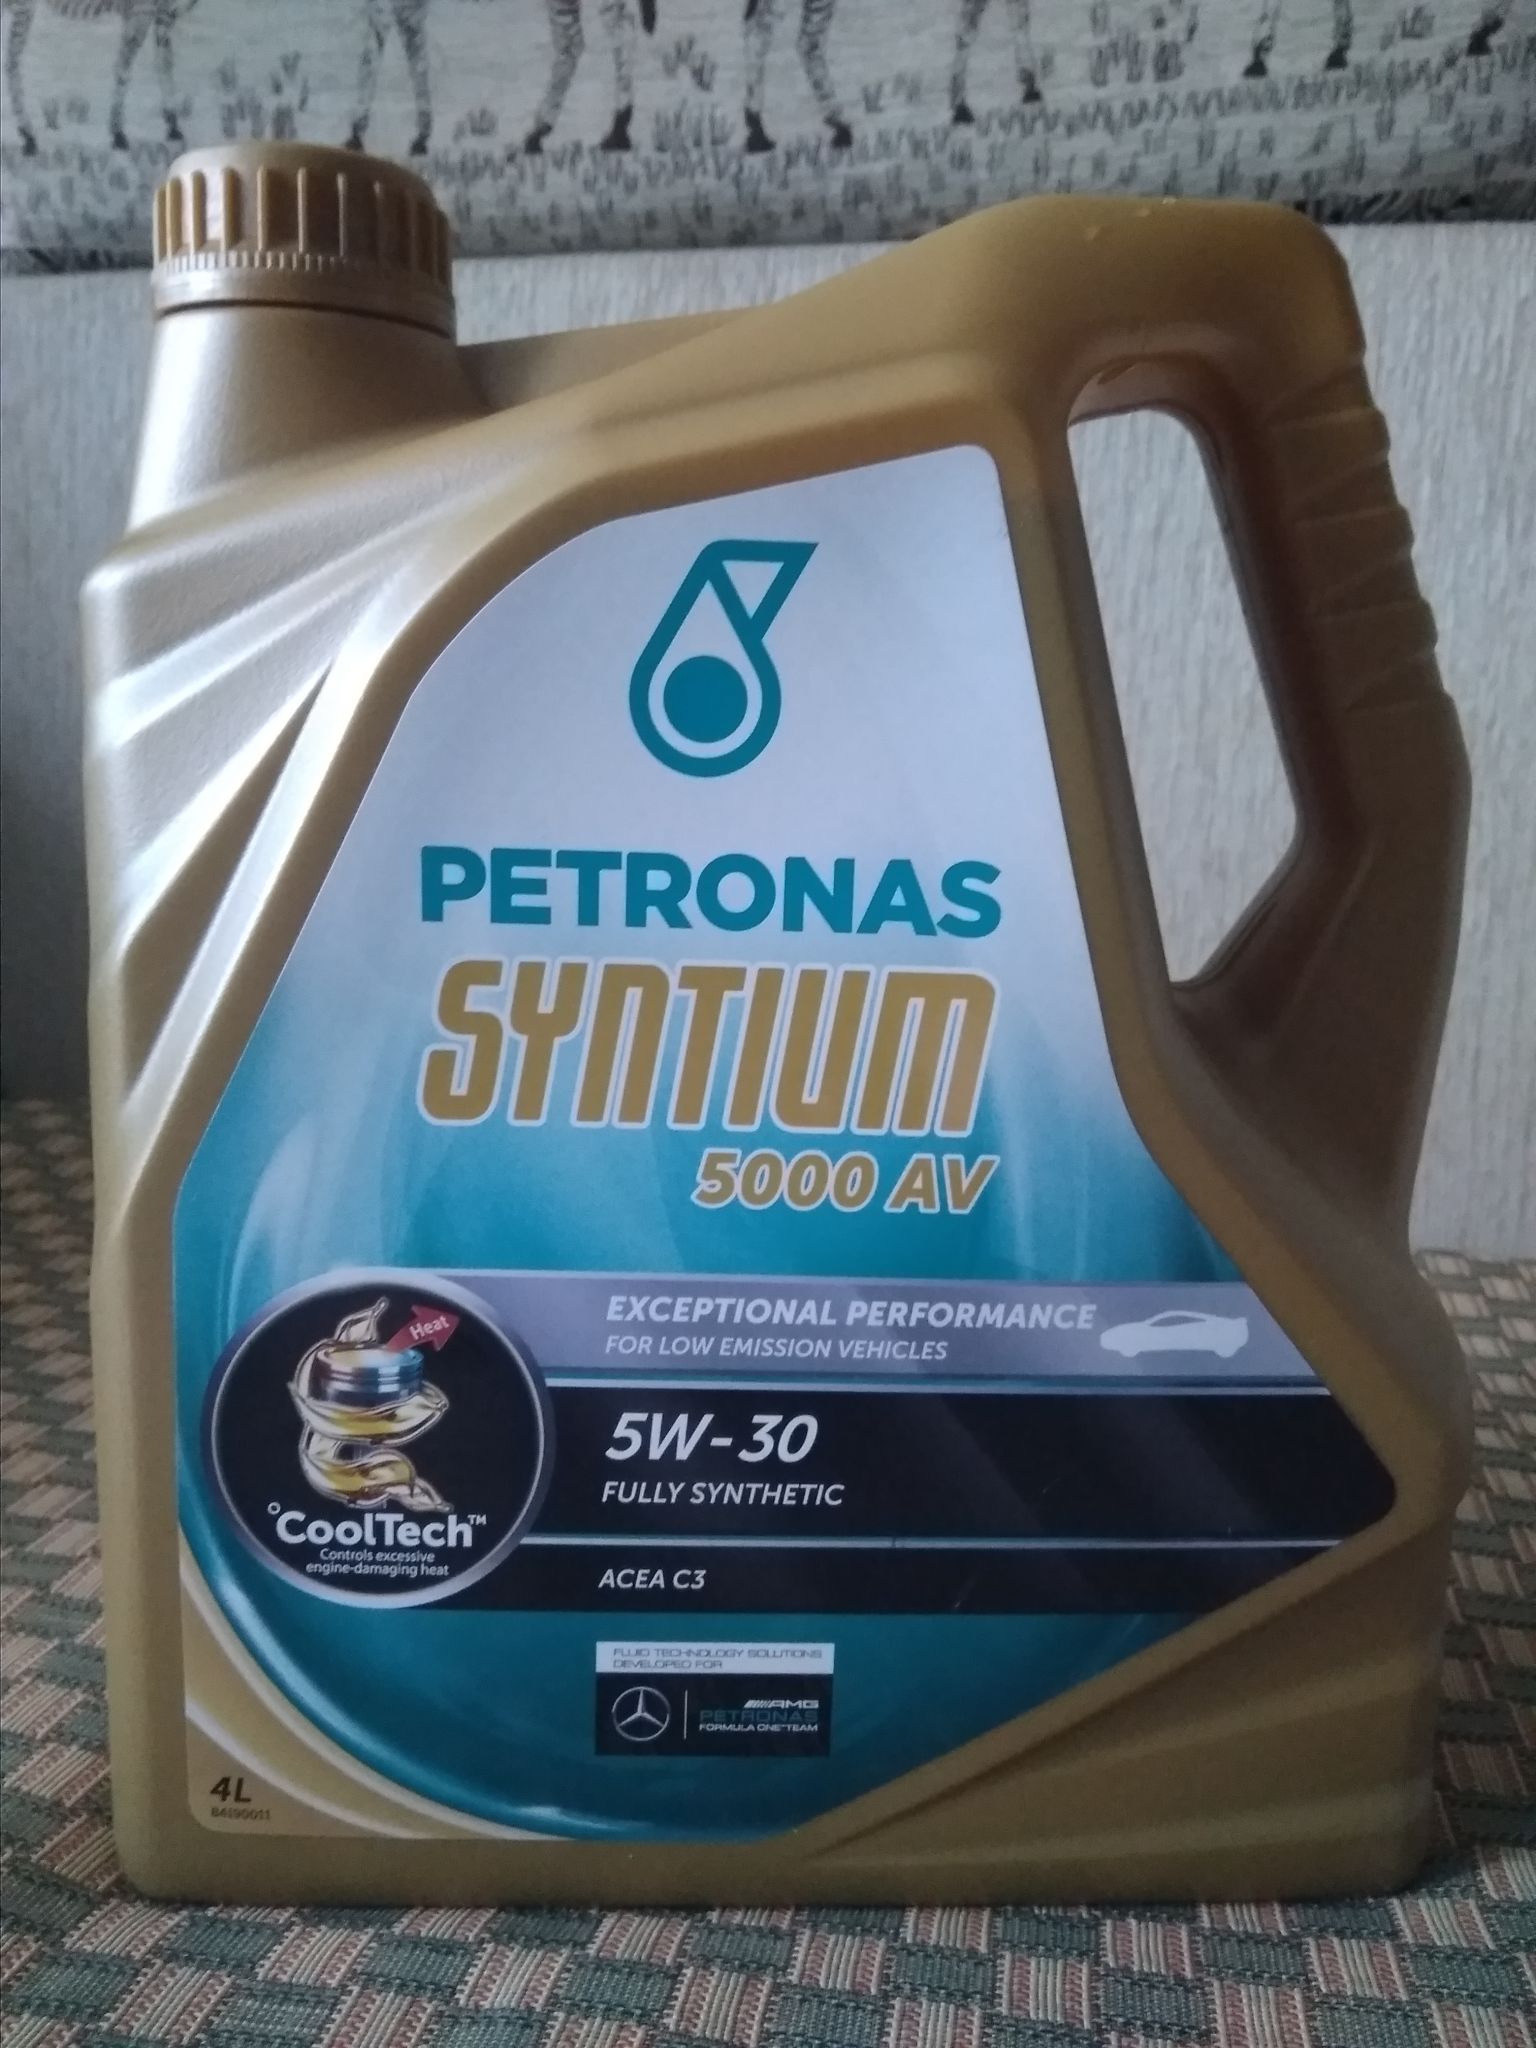 Syntium 5000 av. Petronas 5000 av 5w30. Petronas Syntium 5000 5w30. Petronas Syntium 5000 av 5w-30. Petronas Syntium 5000 XS 5w30.